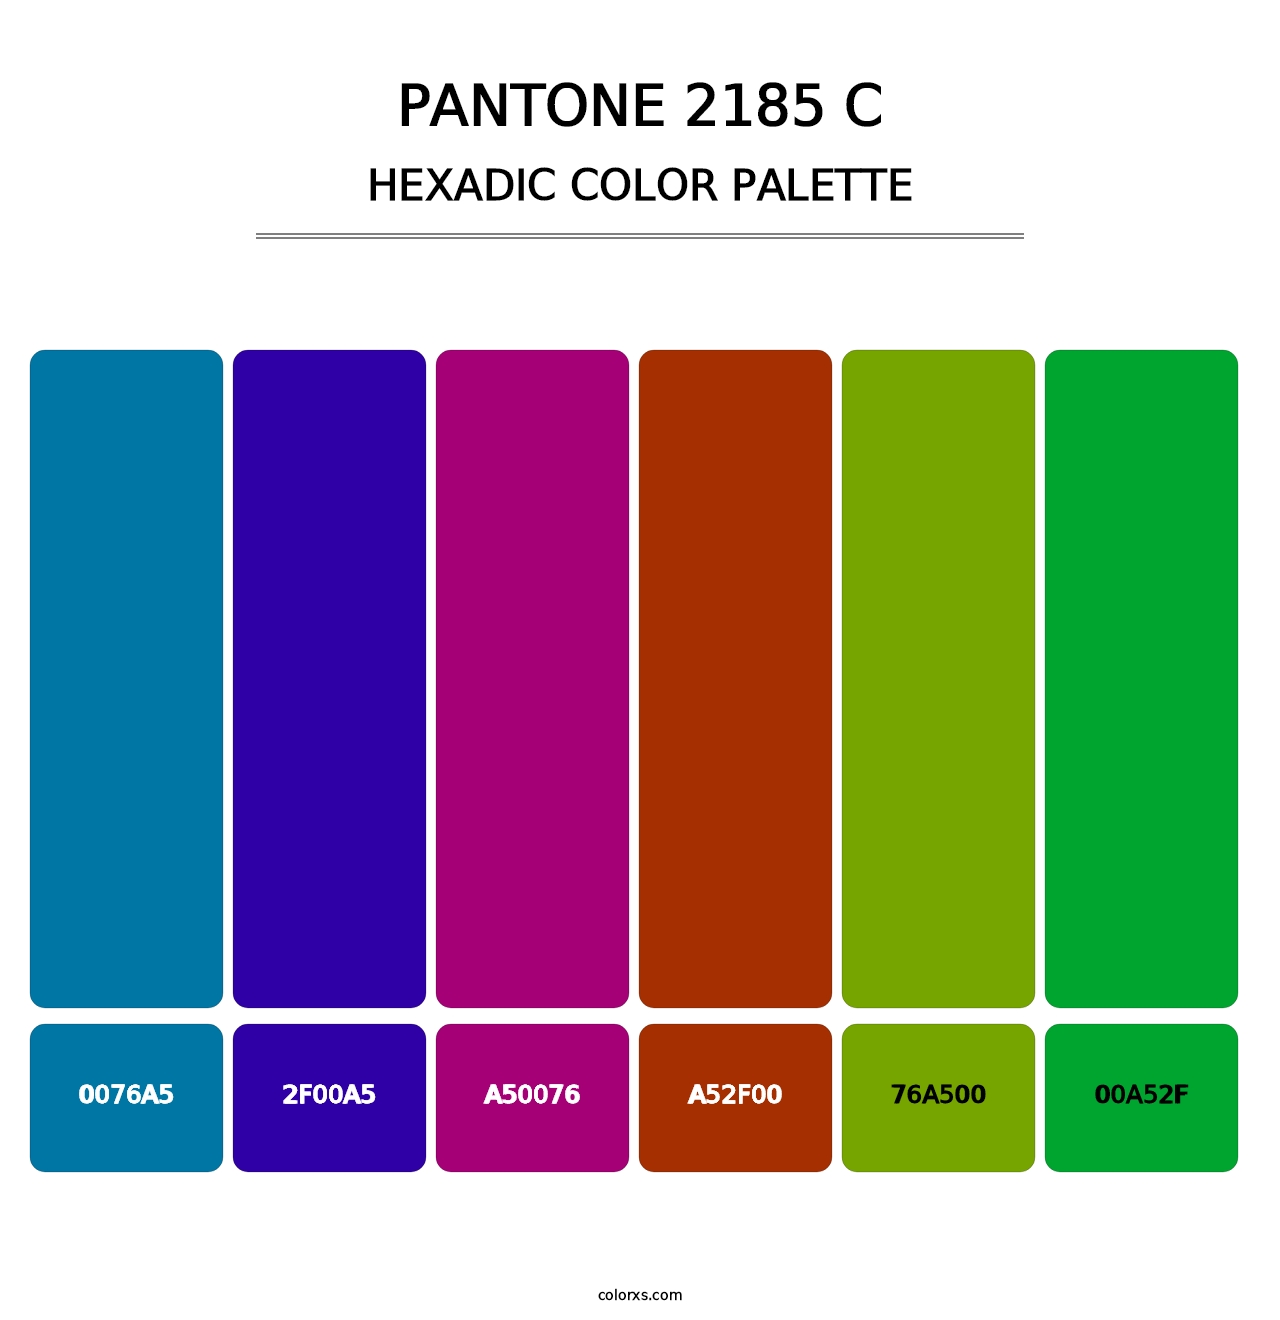 PANTONE 2185 C - Hexadic Color Palette